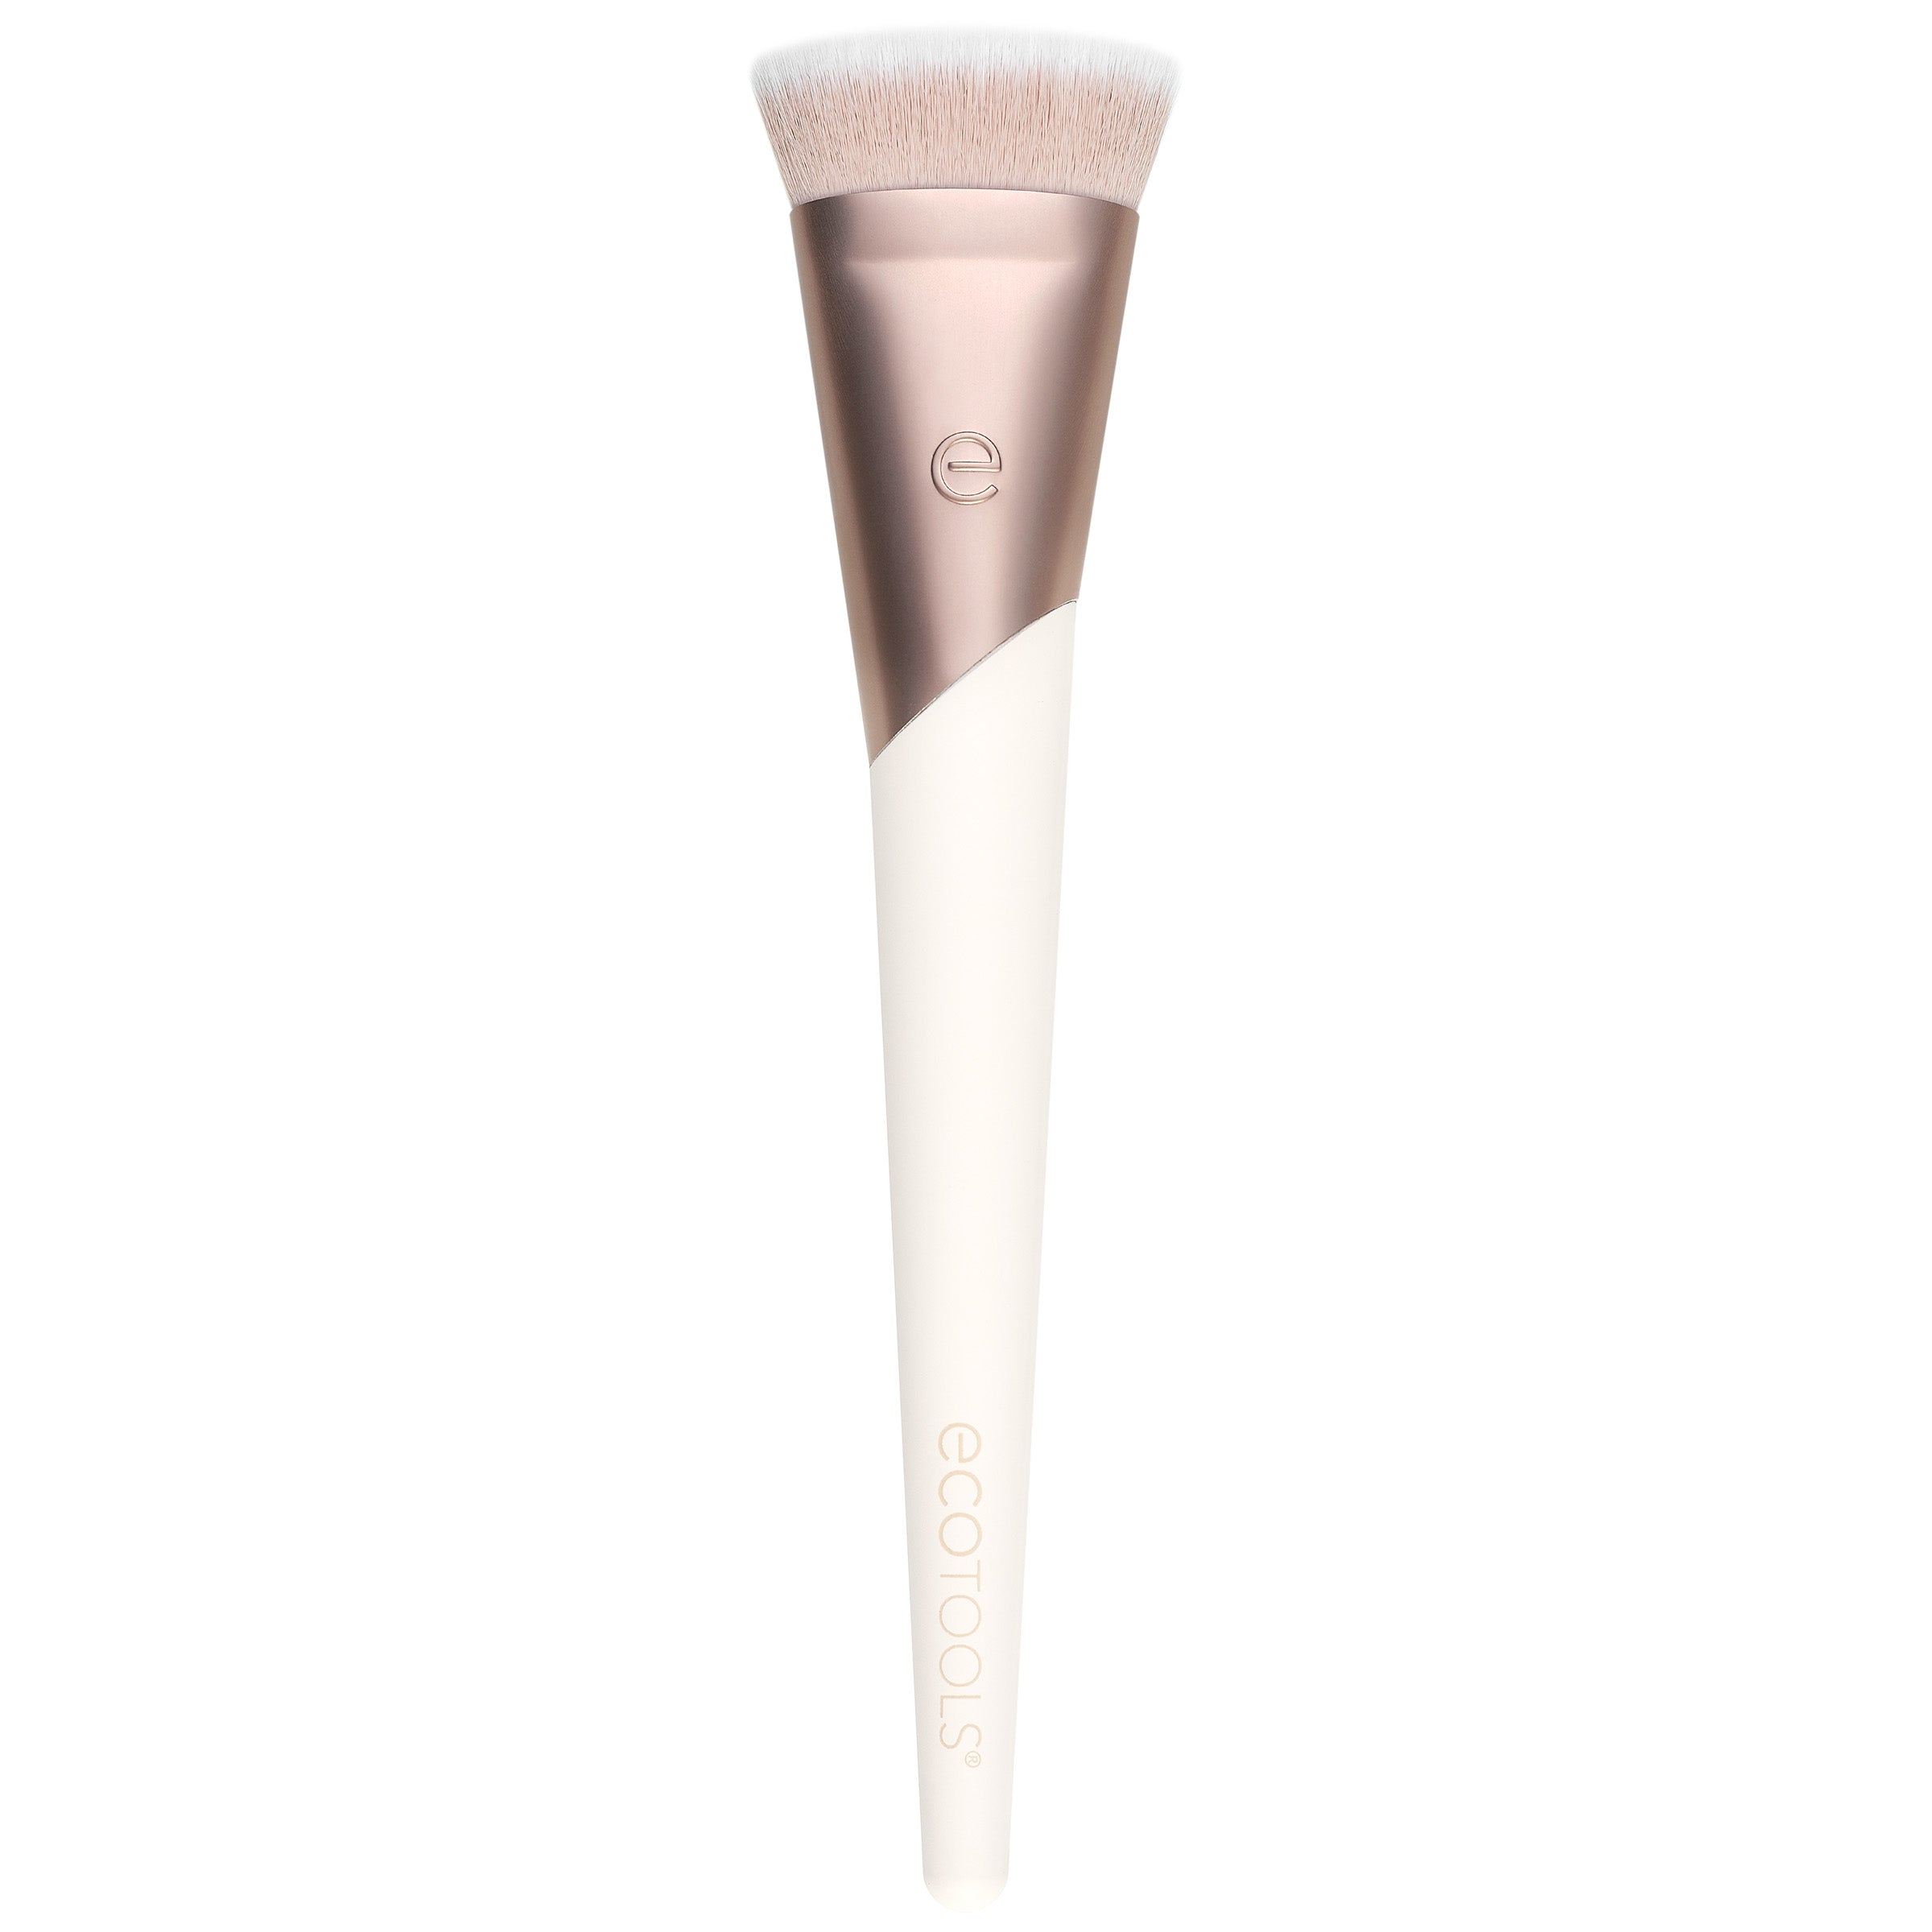 Yoseng Oval Foundation Brush 5 Pcs Toothbrush Makeup Brushes Fast Flawless Application Liquid Cream Powder Foundation